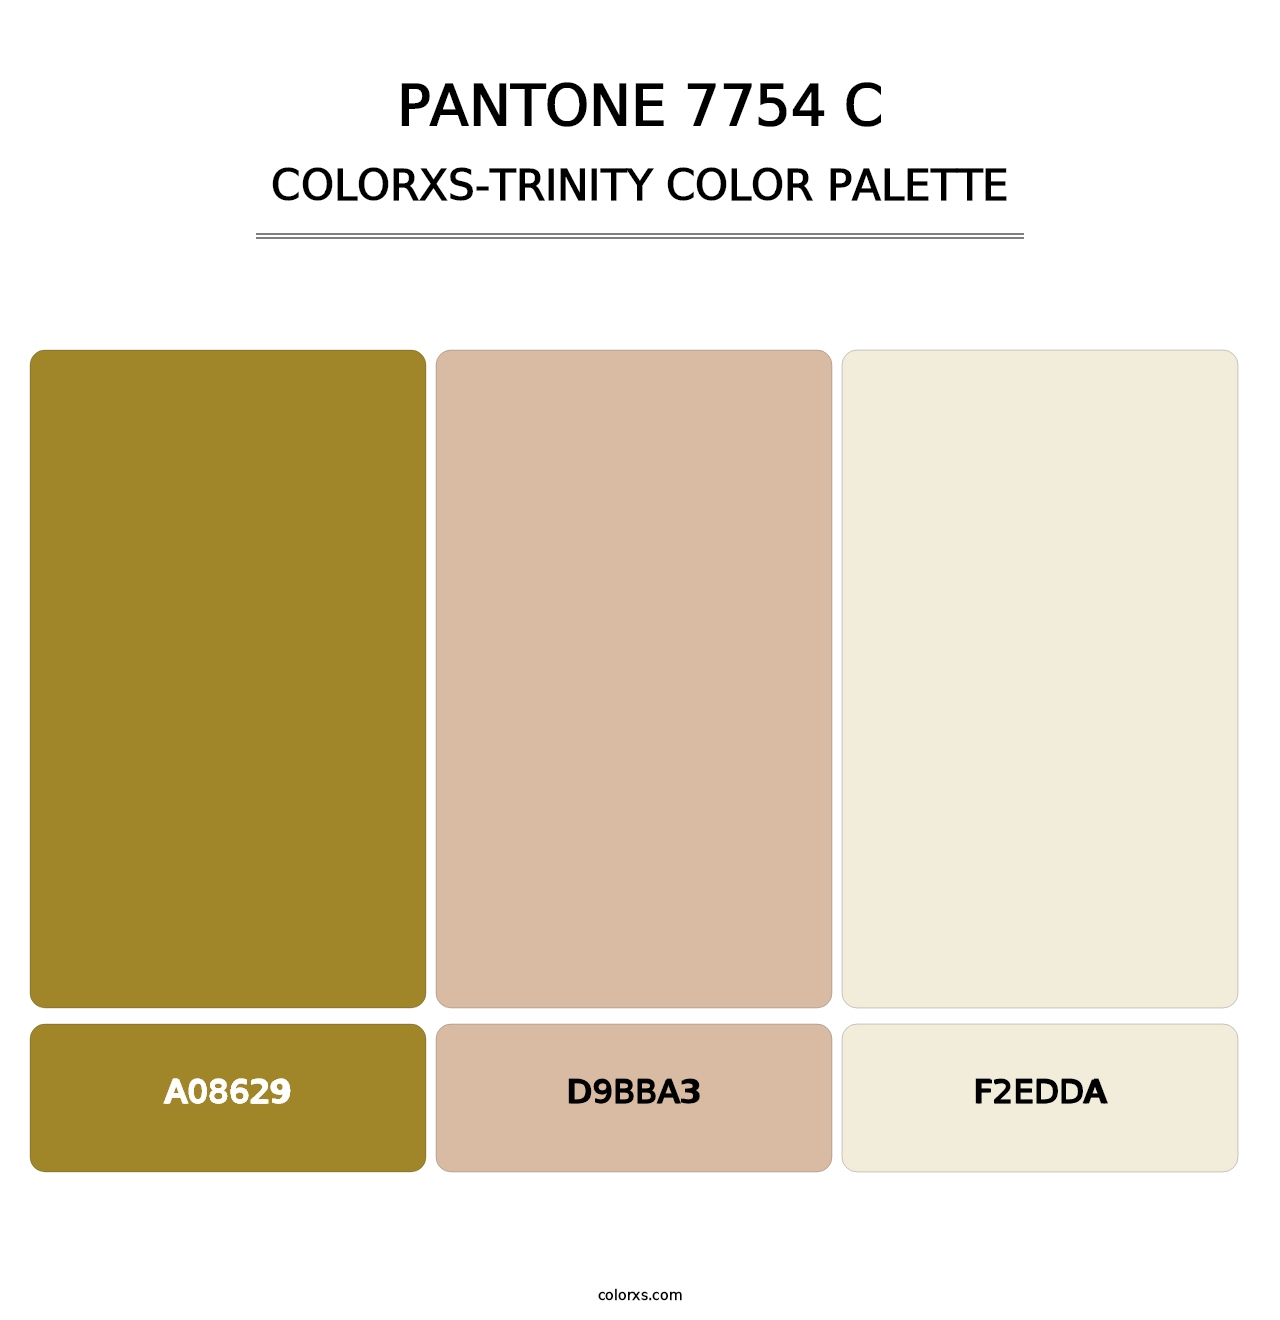 PANTONE 7754 C - Colorxs Trinity Palette